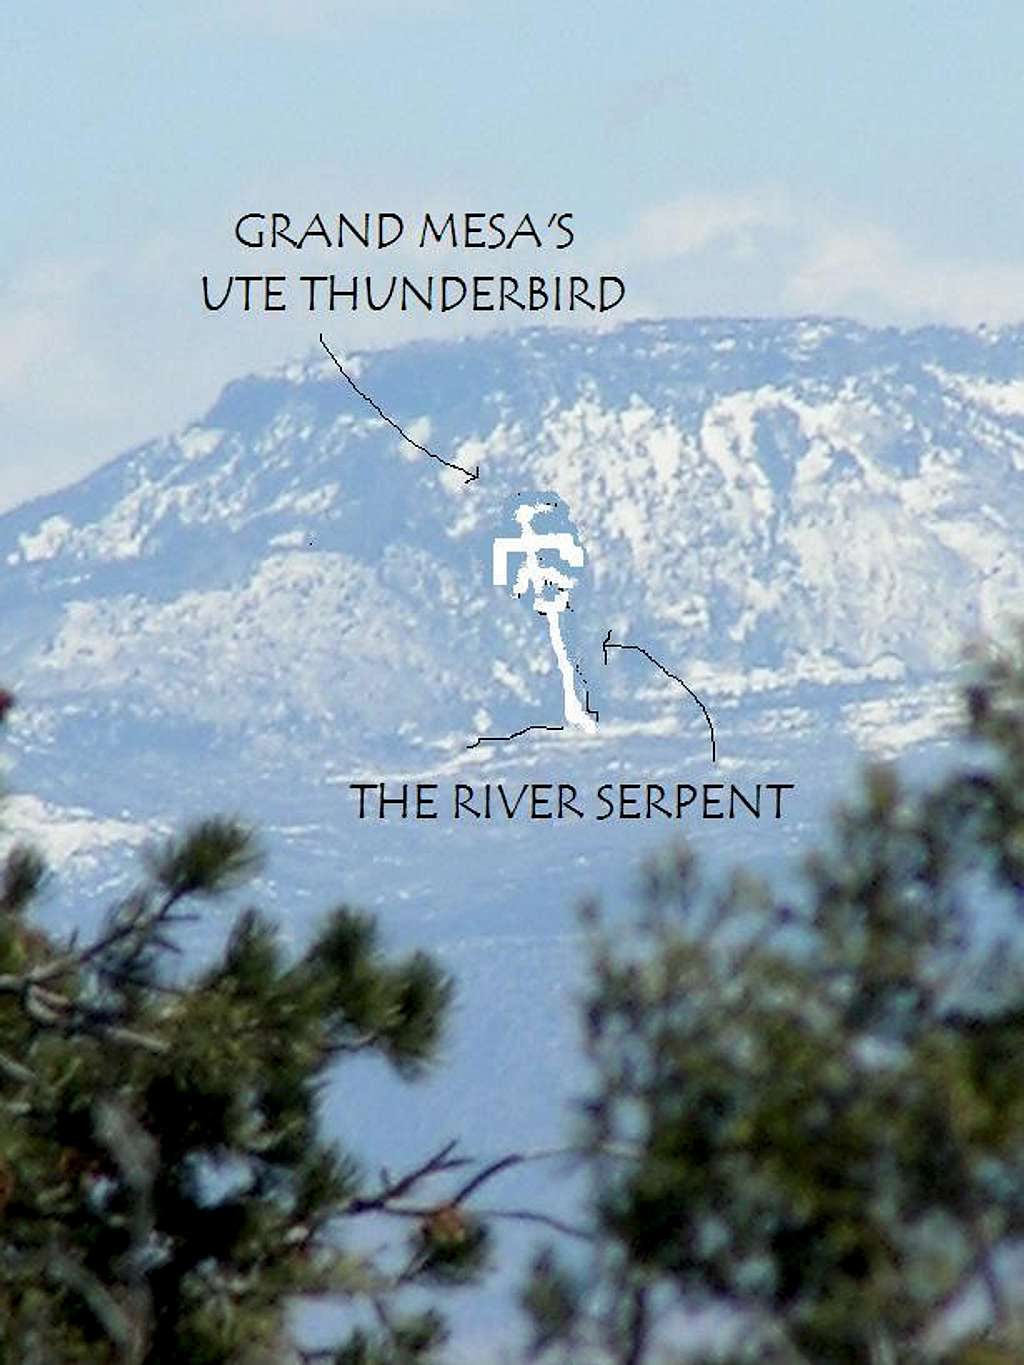 The Grand Mesa Thunderbird in Winter